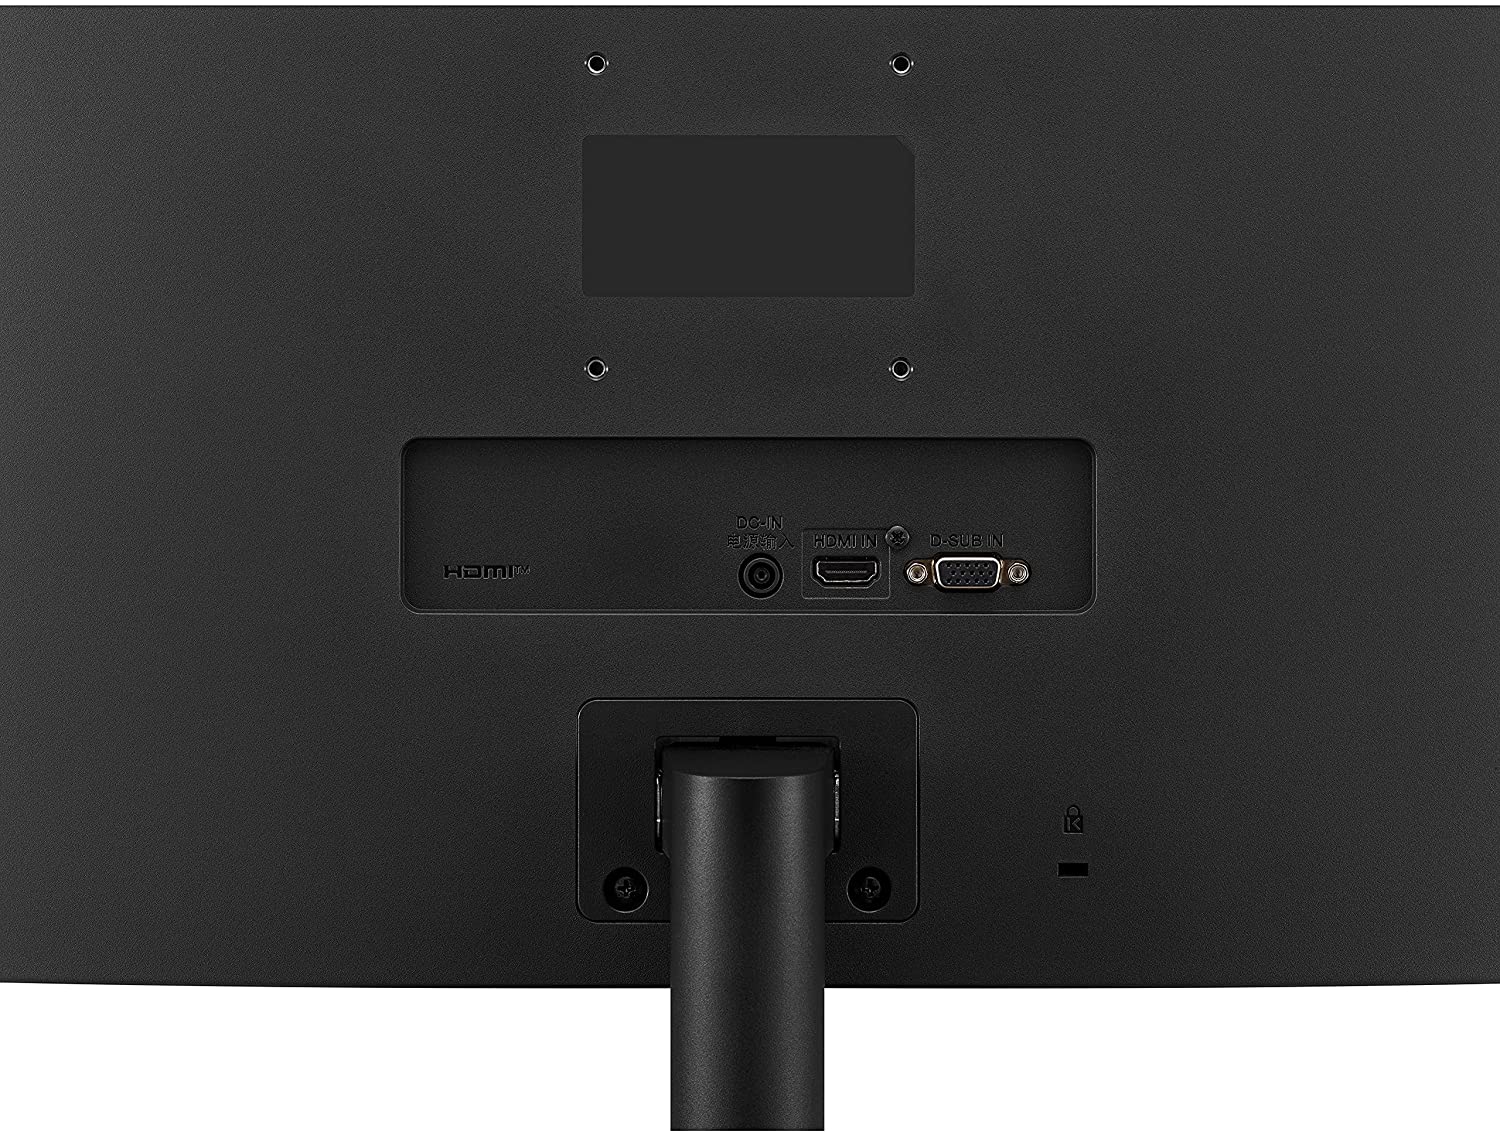 LG 24MP400-B 24” Full HD (1920 x 1080) IPS Monitor with 3-Side Virtually Borderless Design, AMD FreeSync and OnScreen Control – Black